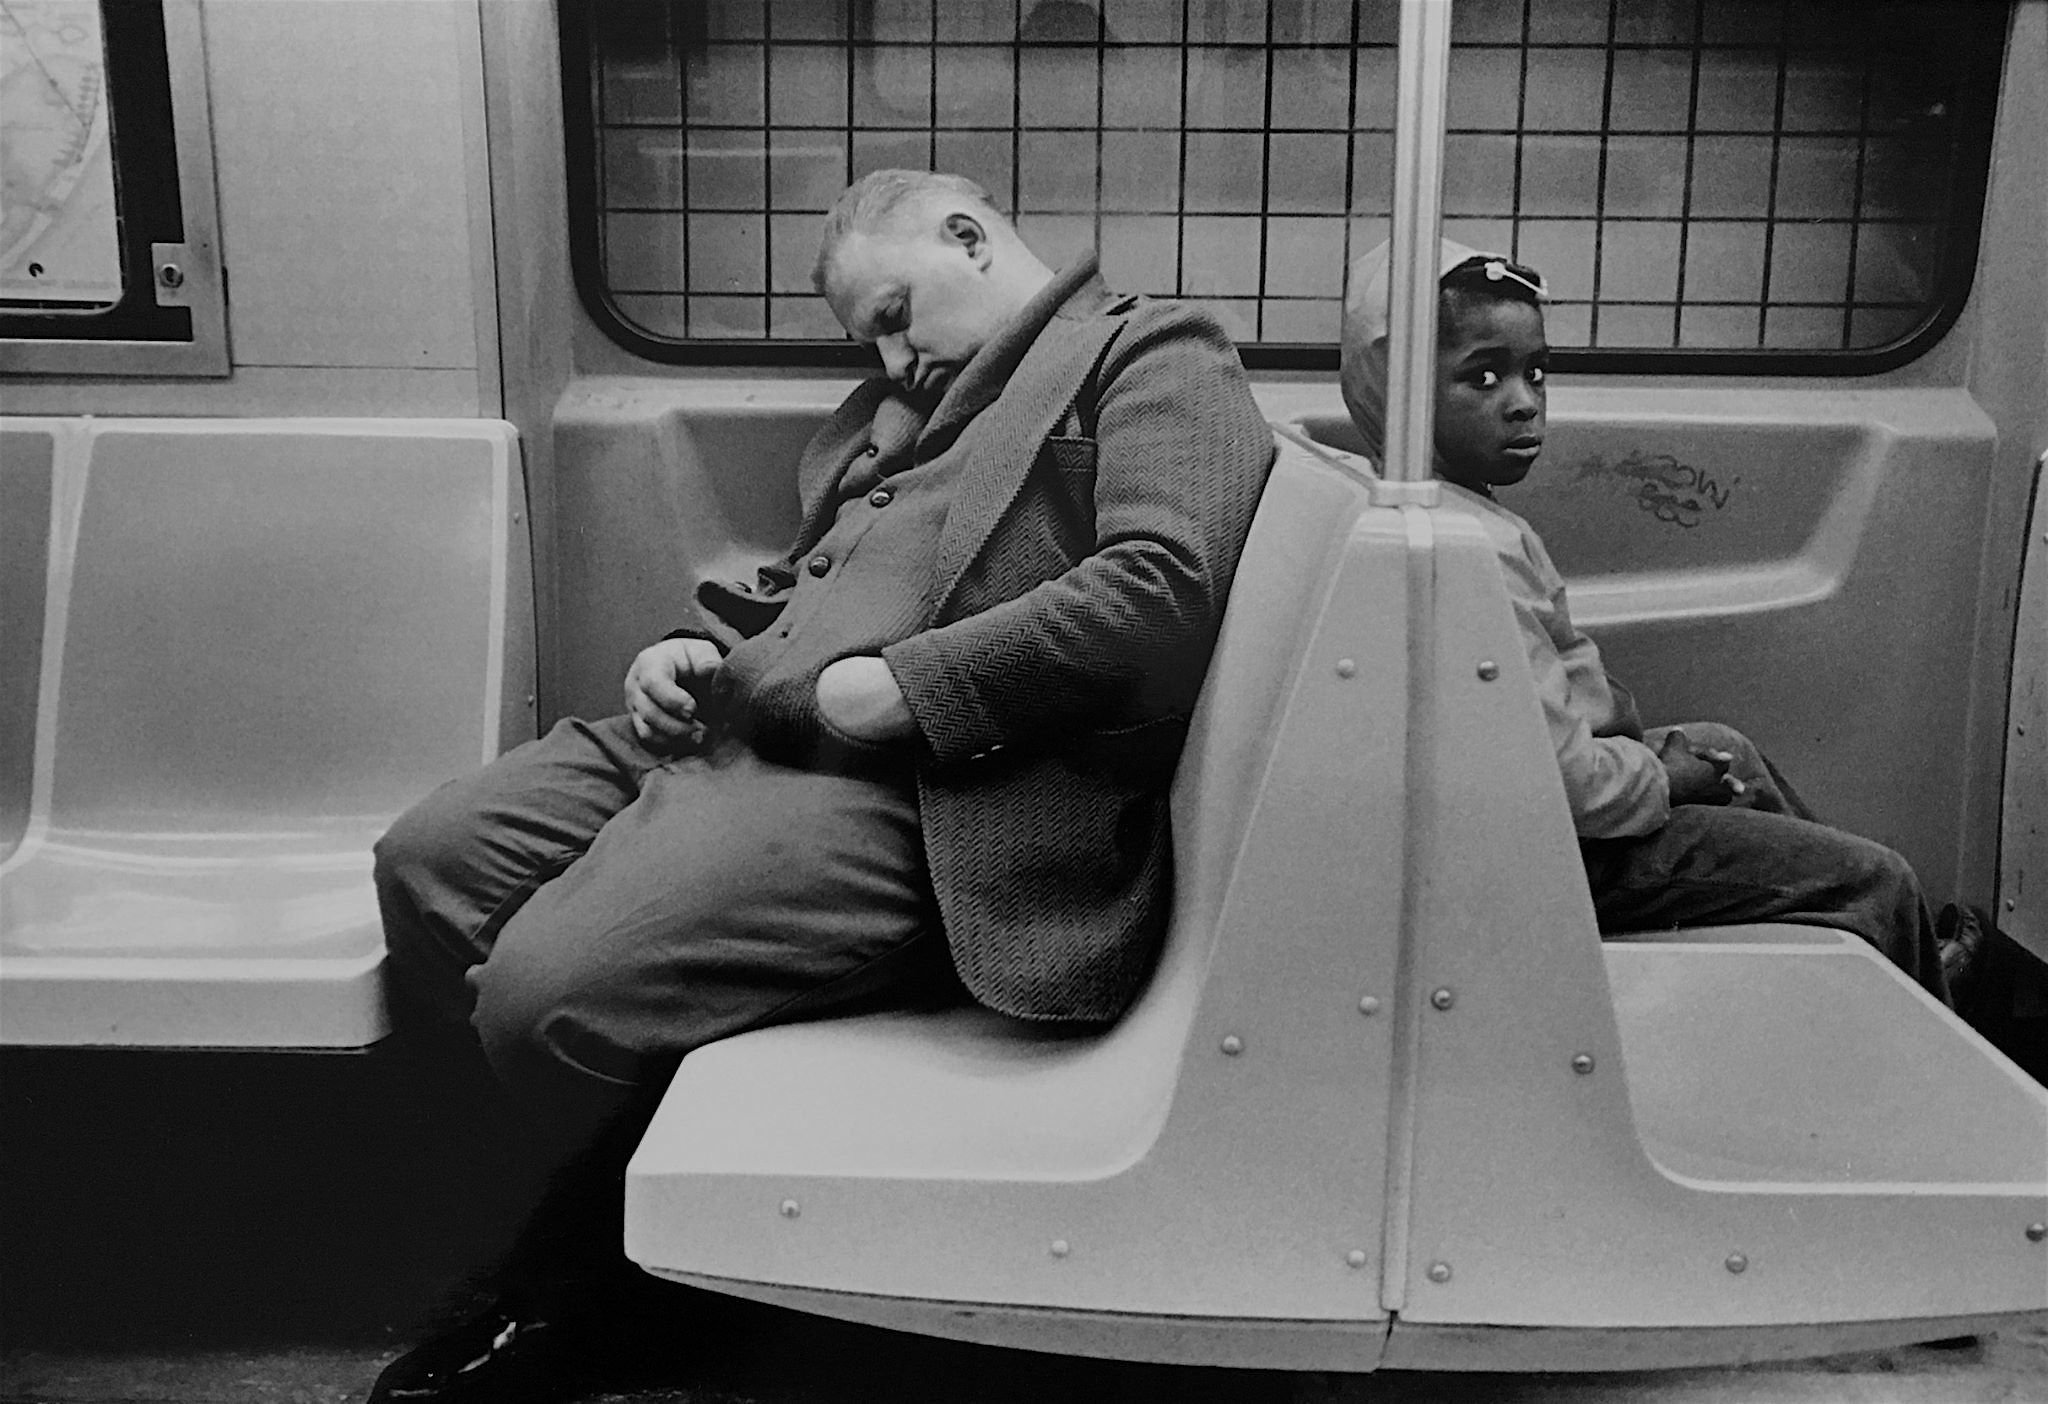 subway sleeper + glaring kid, nyc, c. 1985